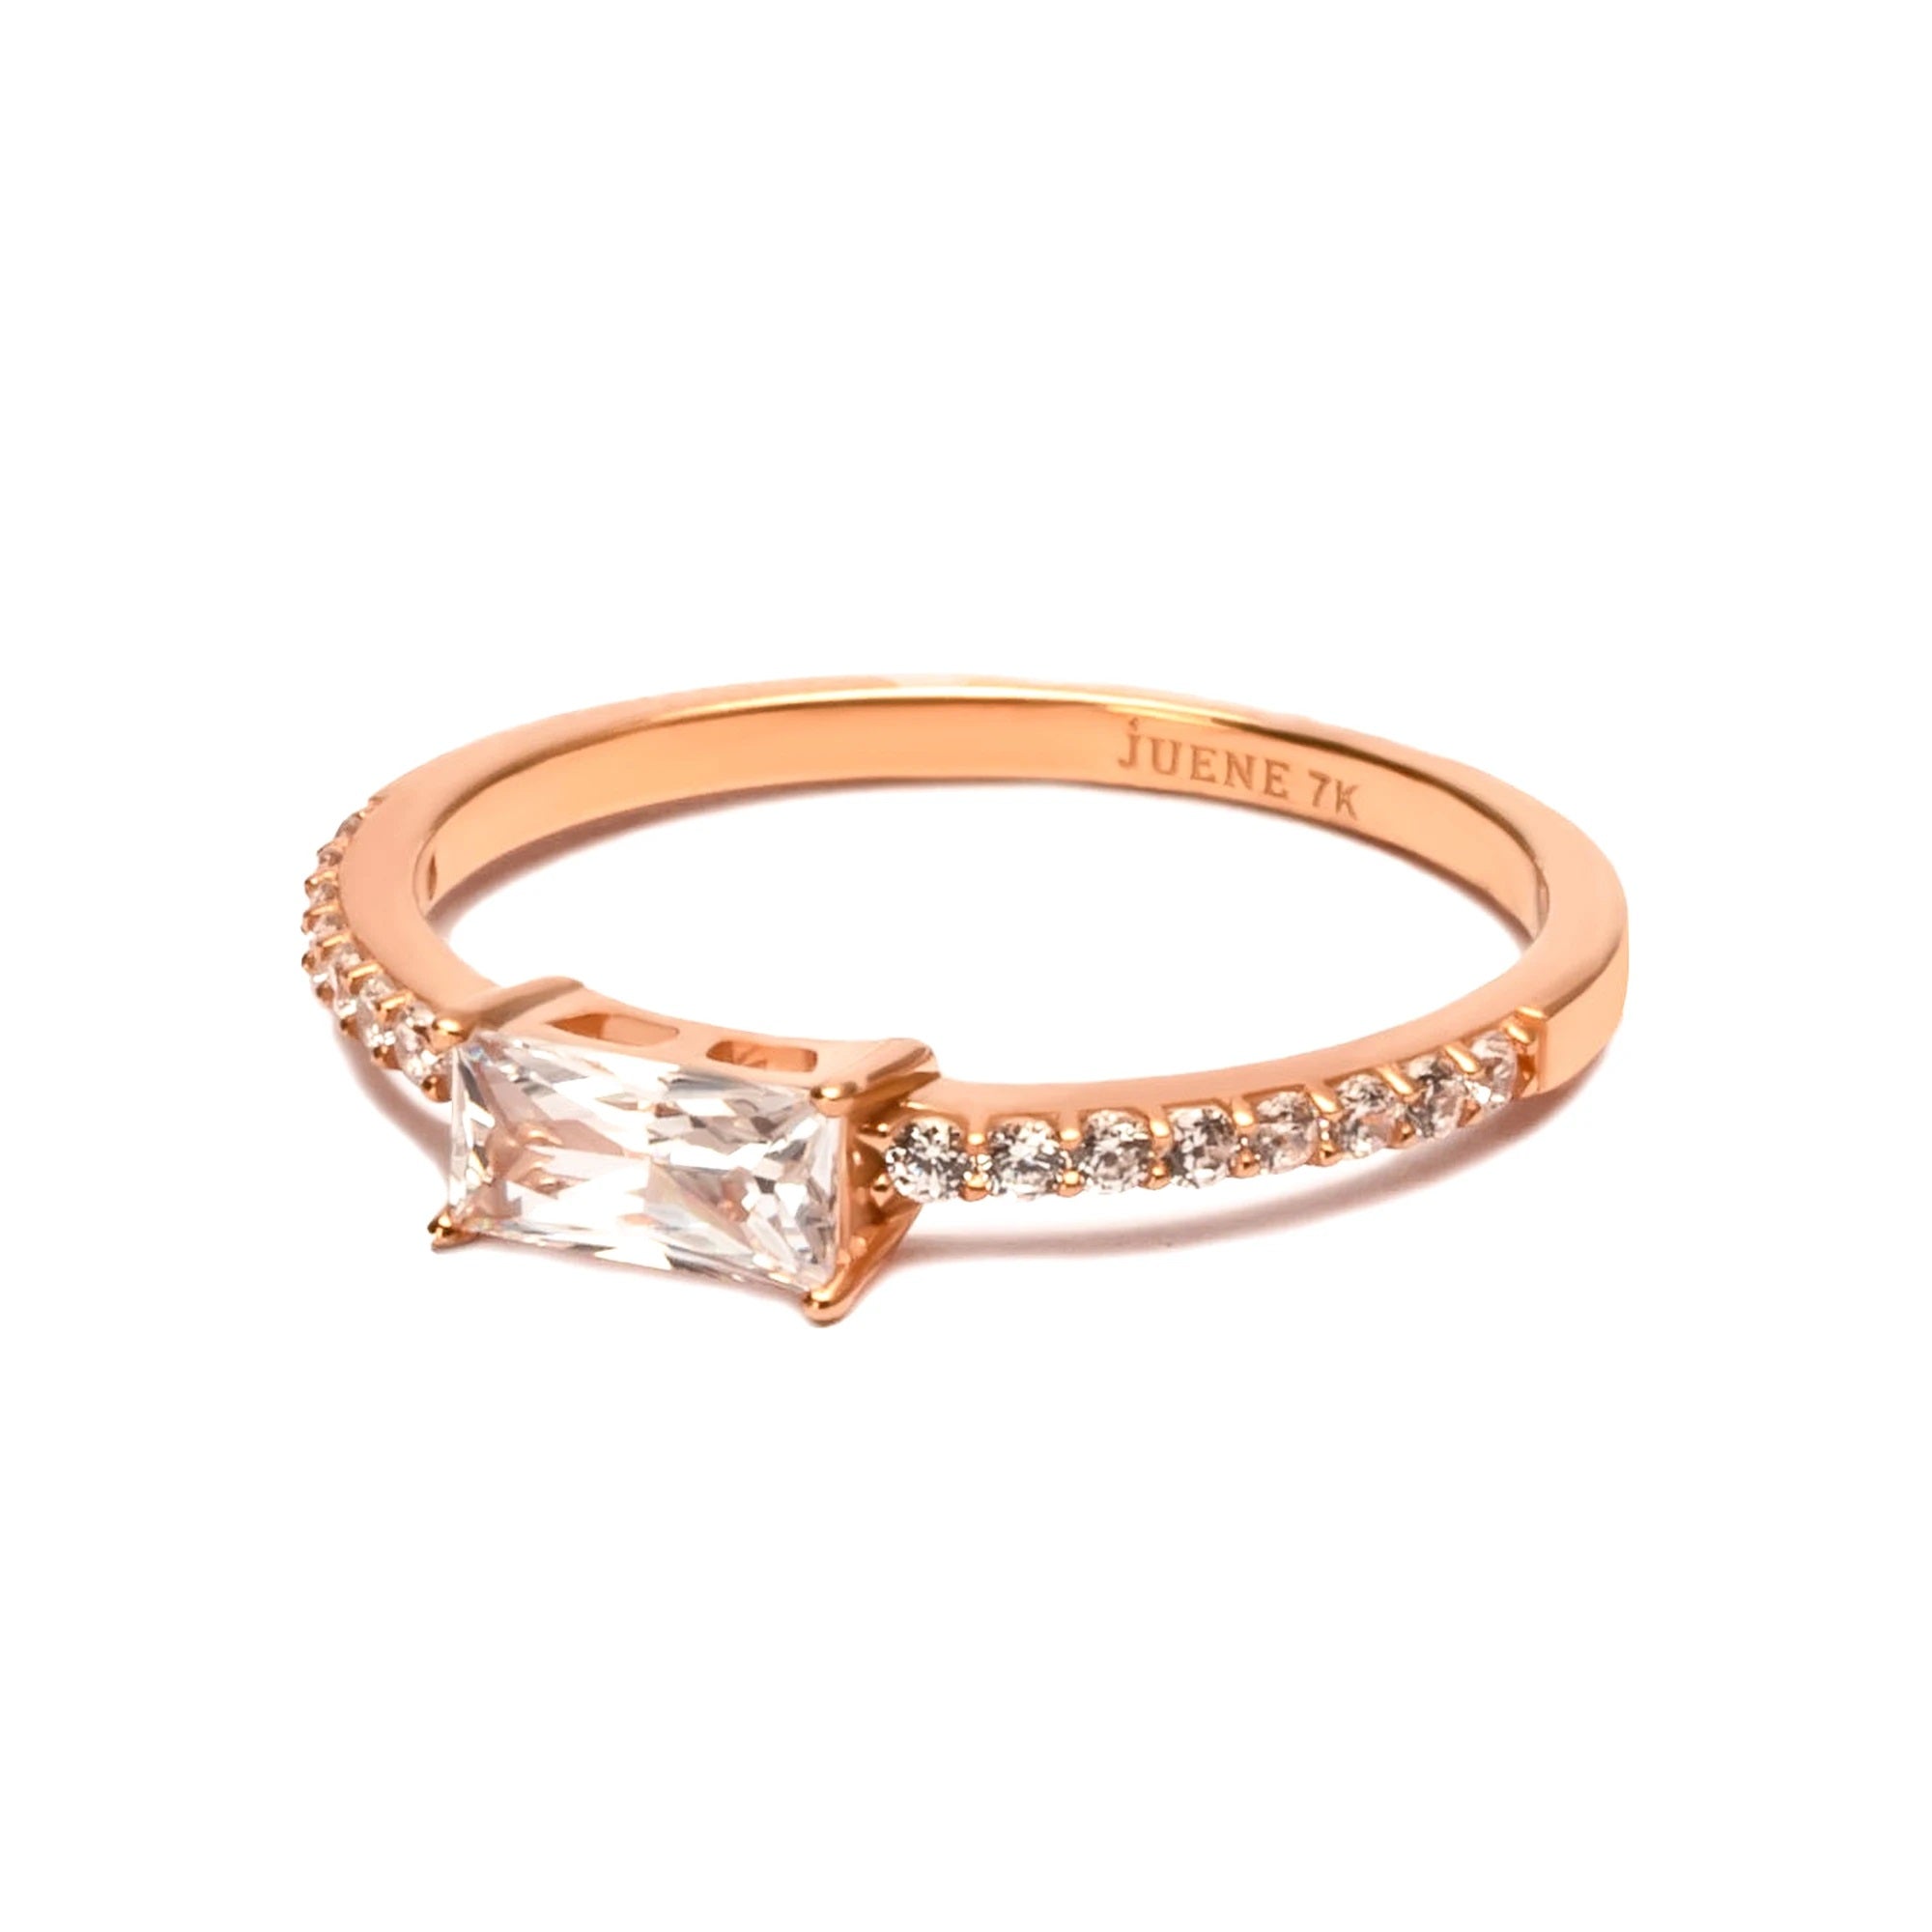 Cincin Emas 7k - Sage Gold Ring - Quadra Collection - Juene Jewelry